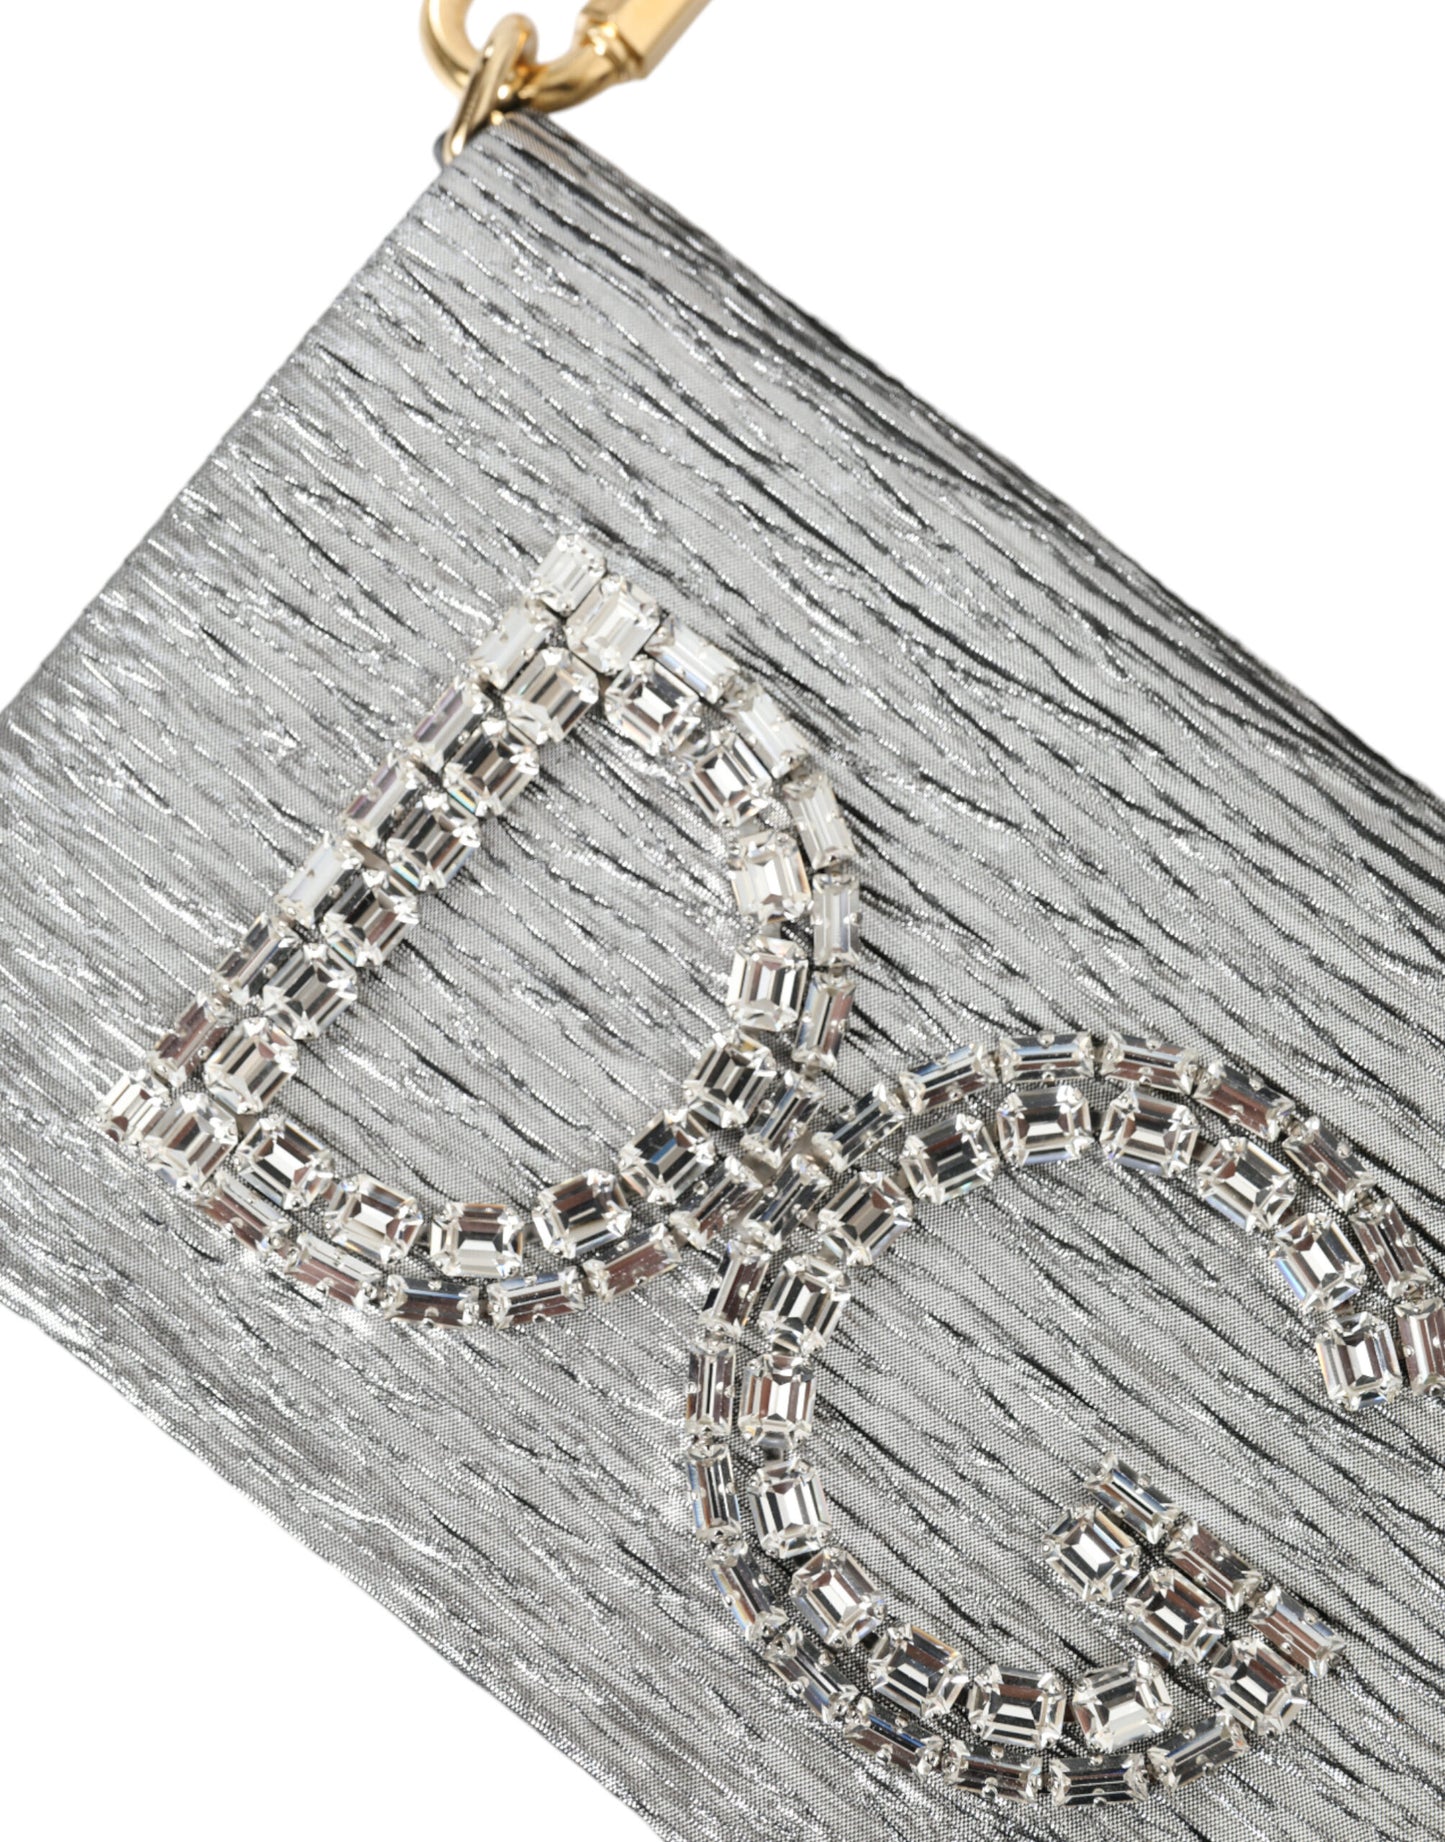 Exquisite Silver Swarovski Embellished Clutch